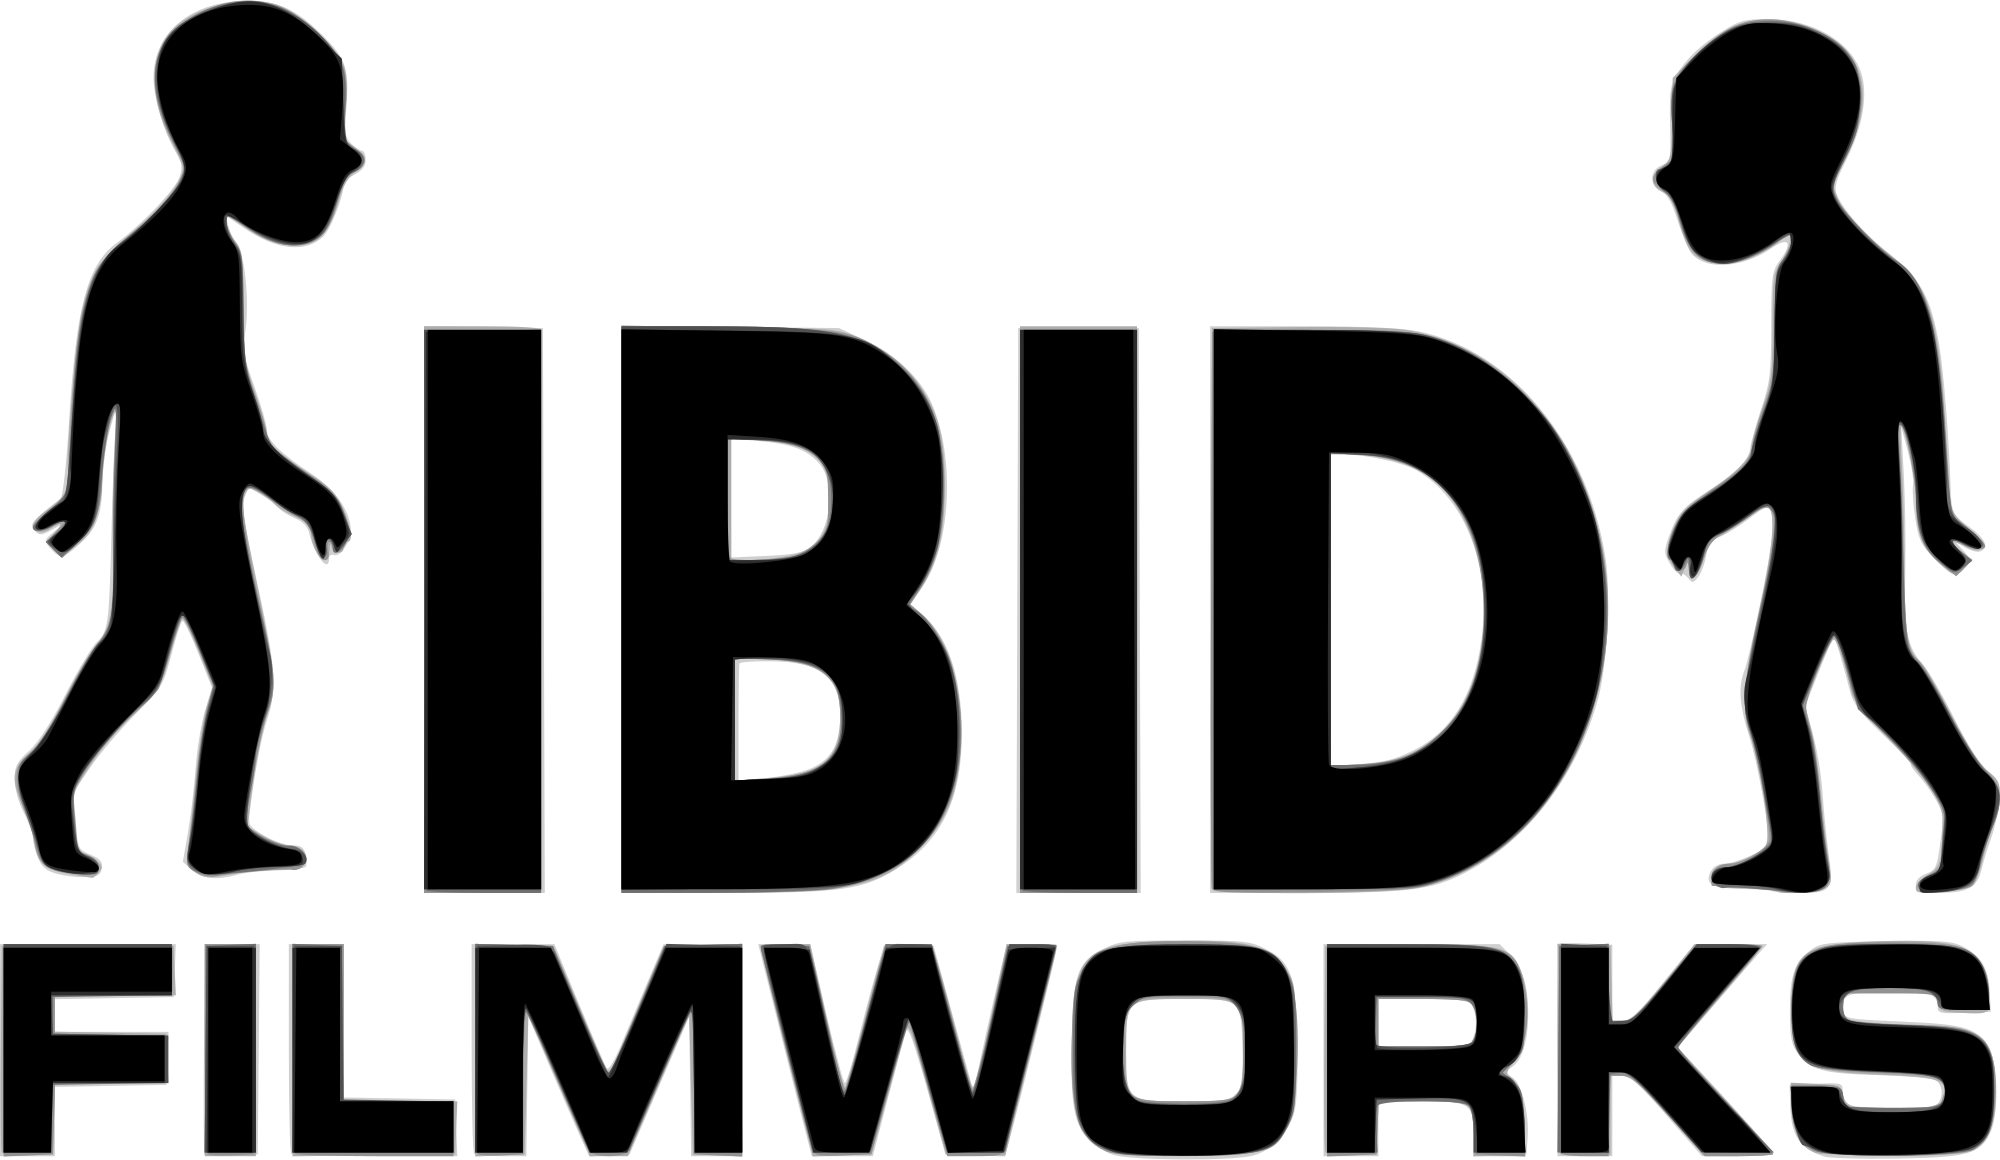 Ibid Filmworks Logo